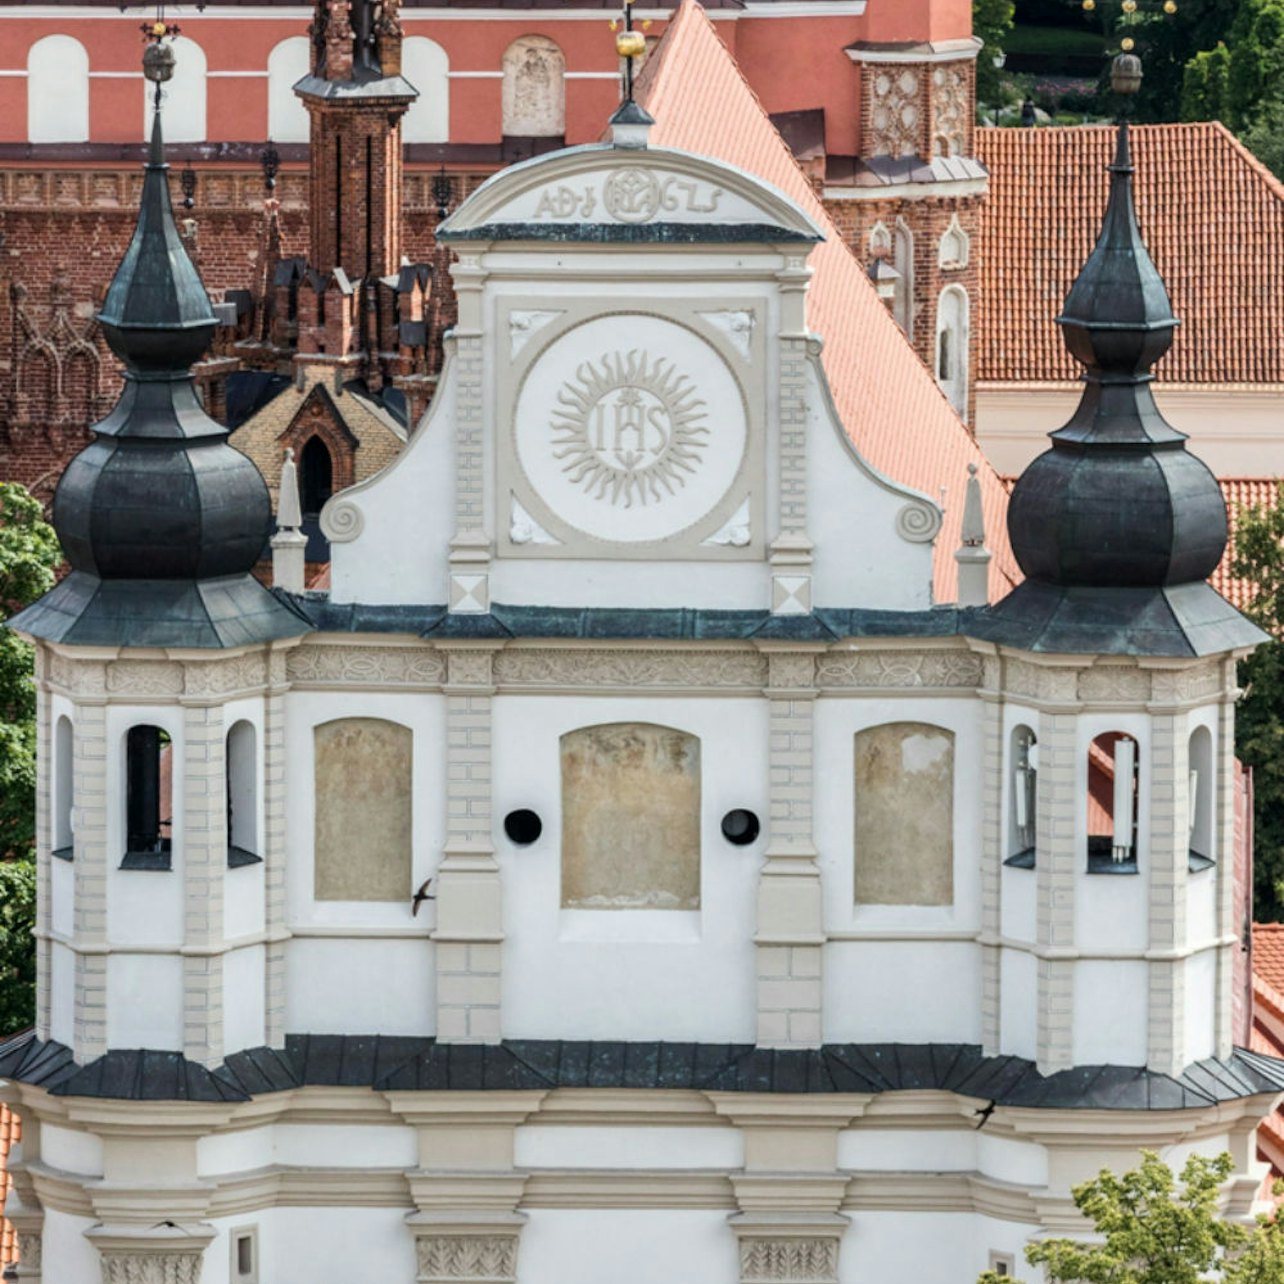 Church Heritage Museum: Treasury - Accommodations in Vilnius